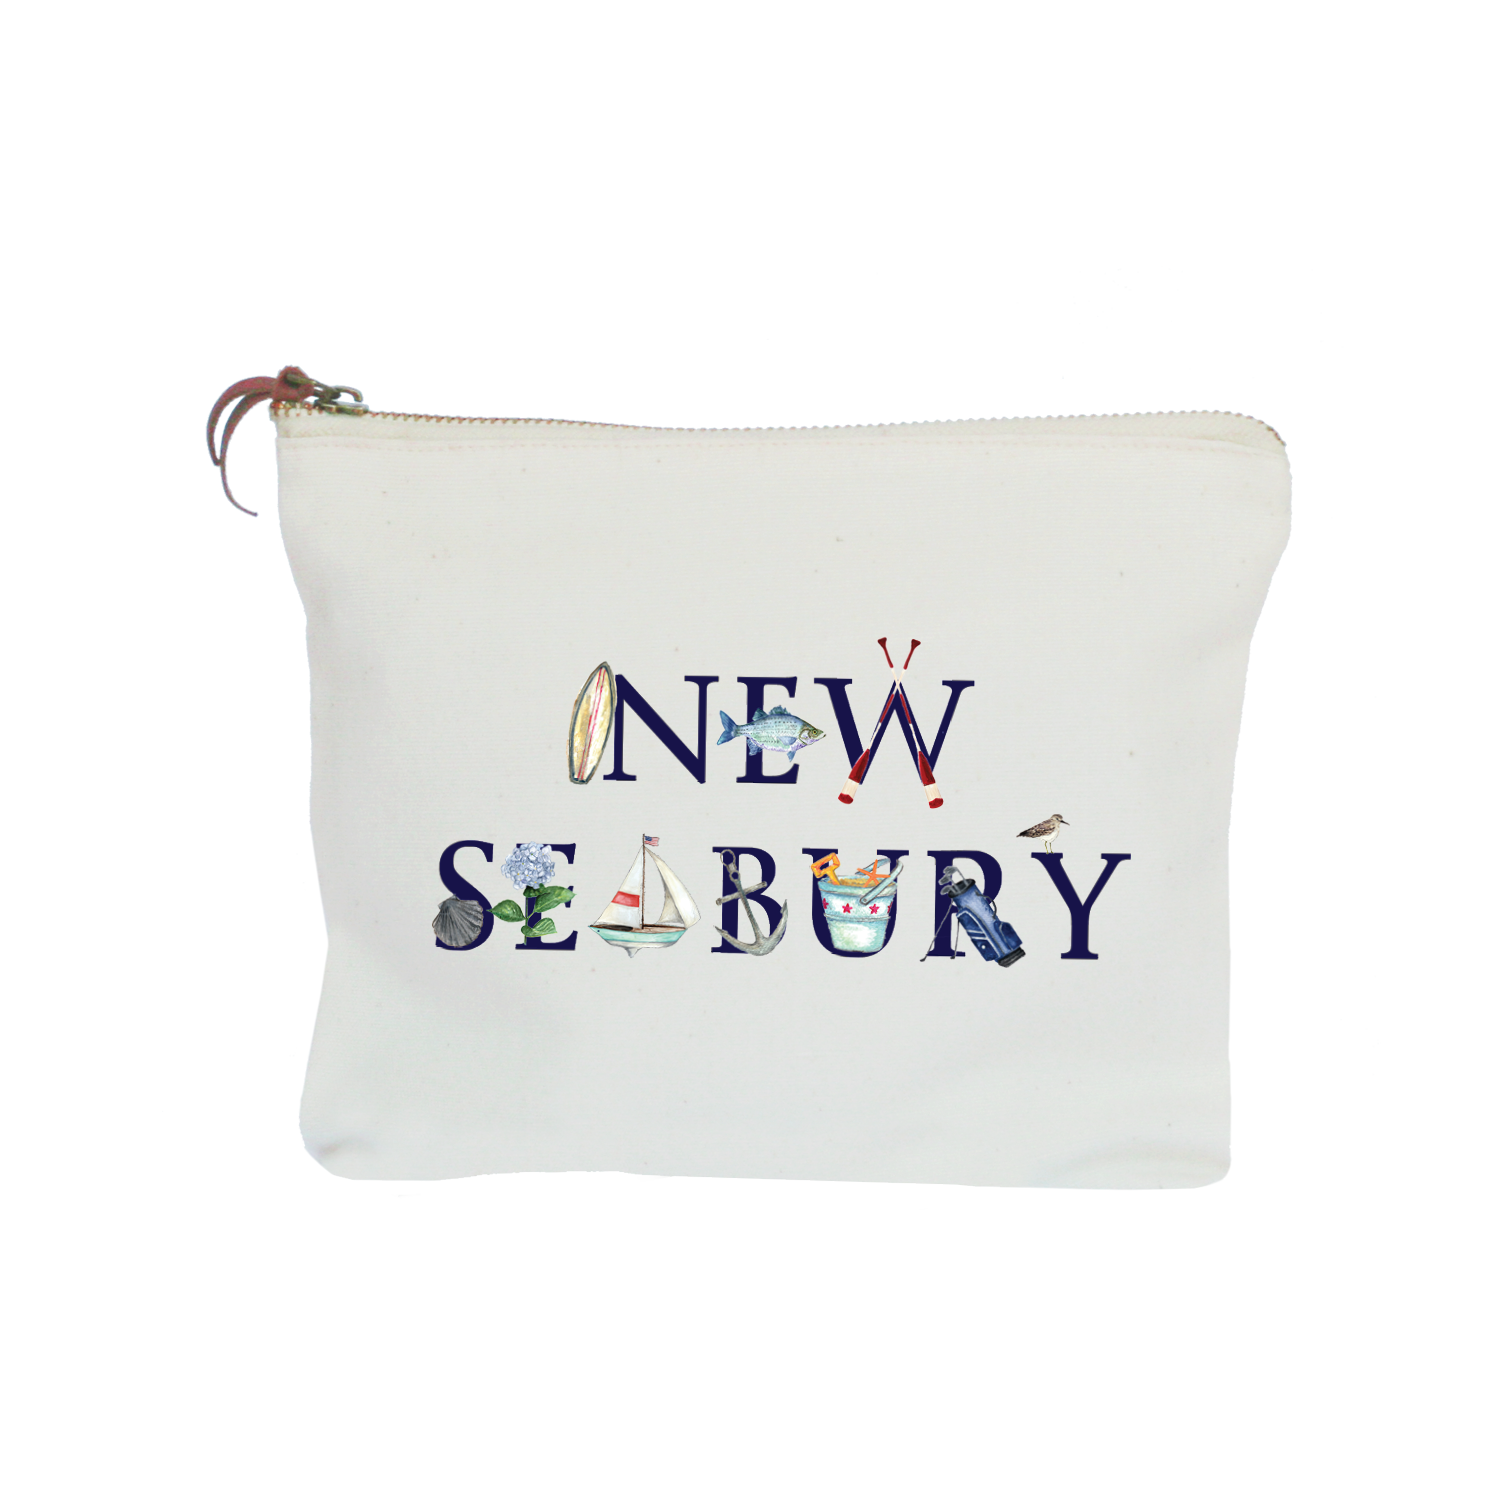 new seabury zipper pouch